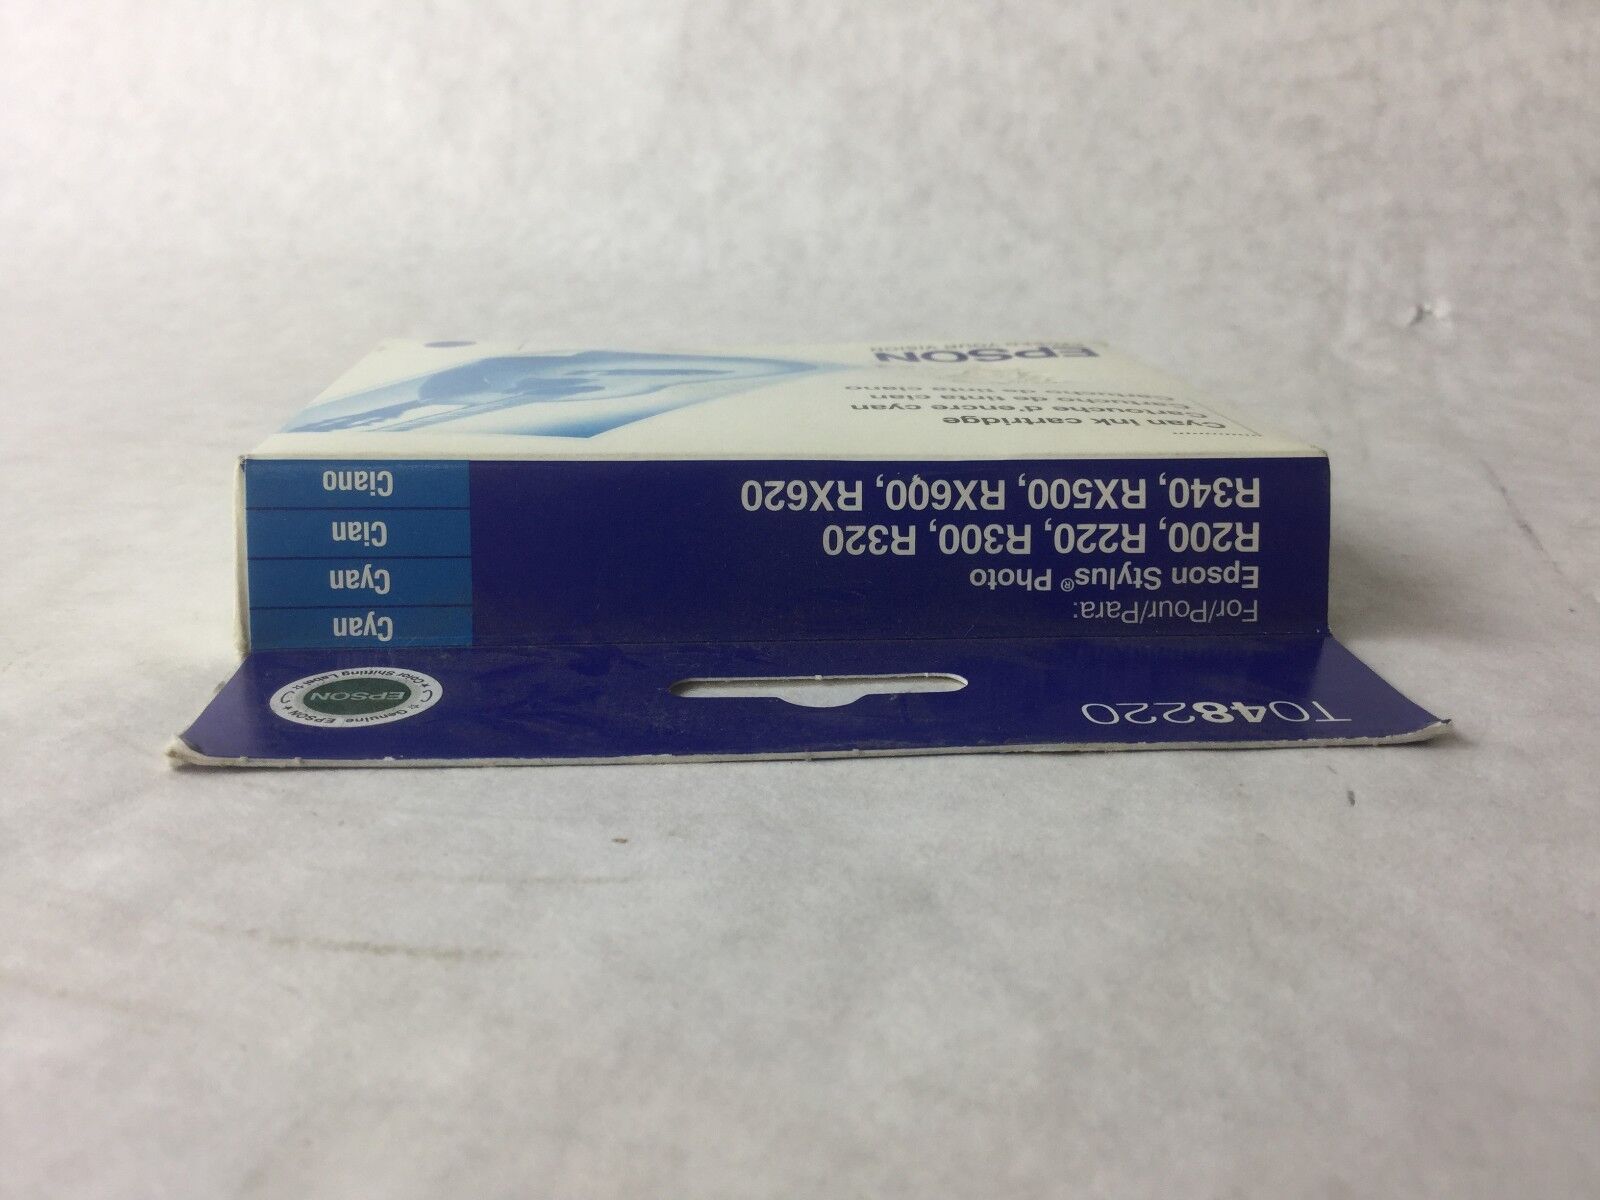 Genuine Epson T048220 Ink Cartridge, Cyan, New Factory Sealed